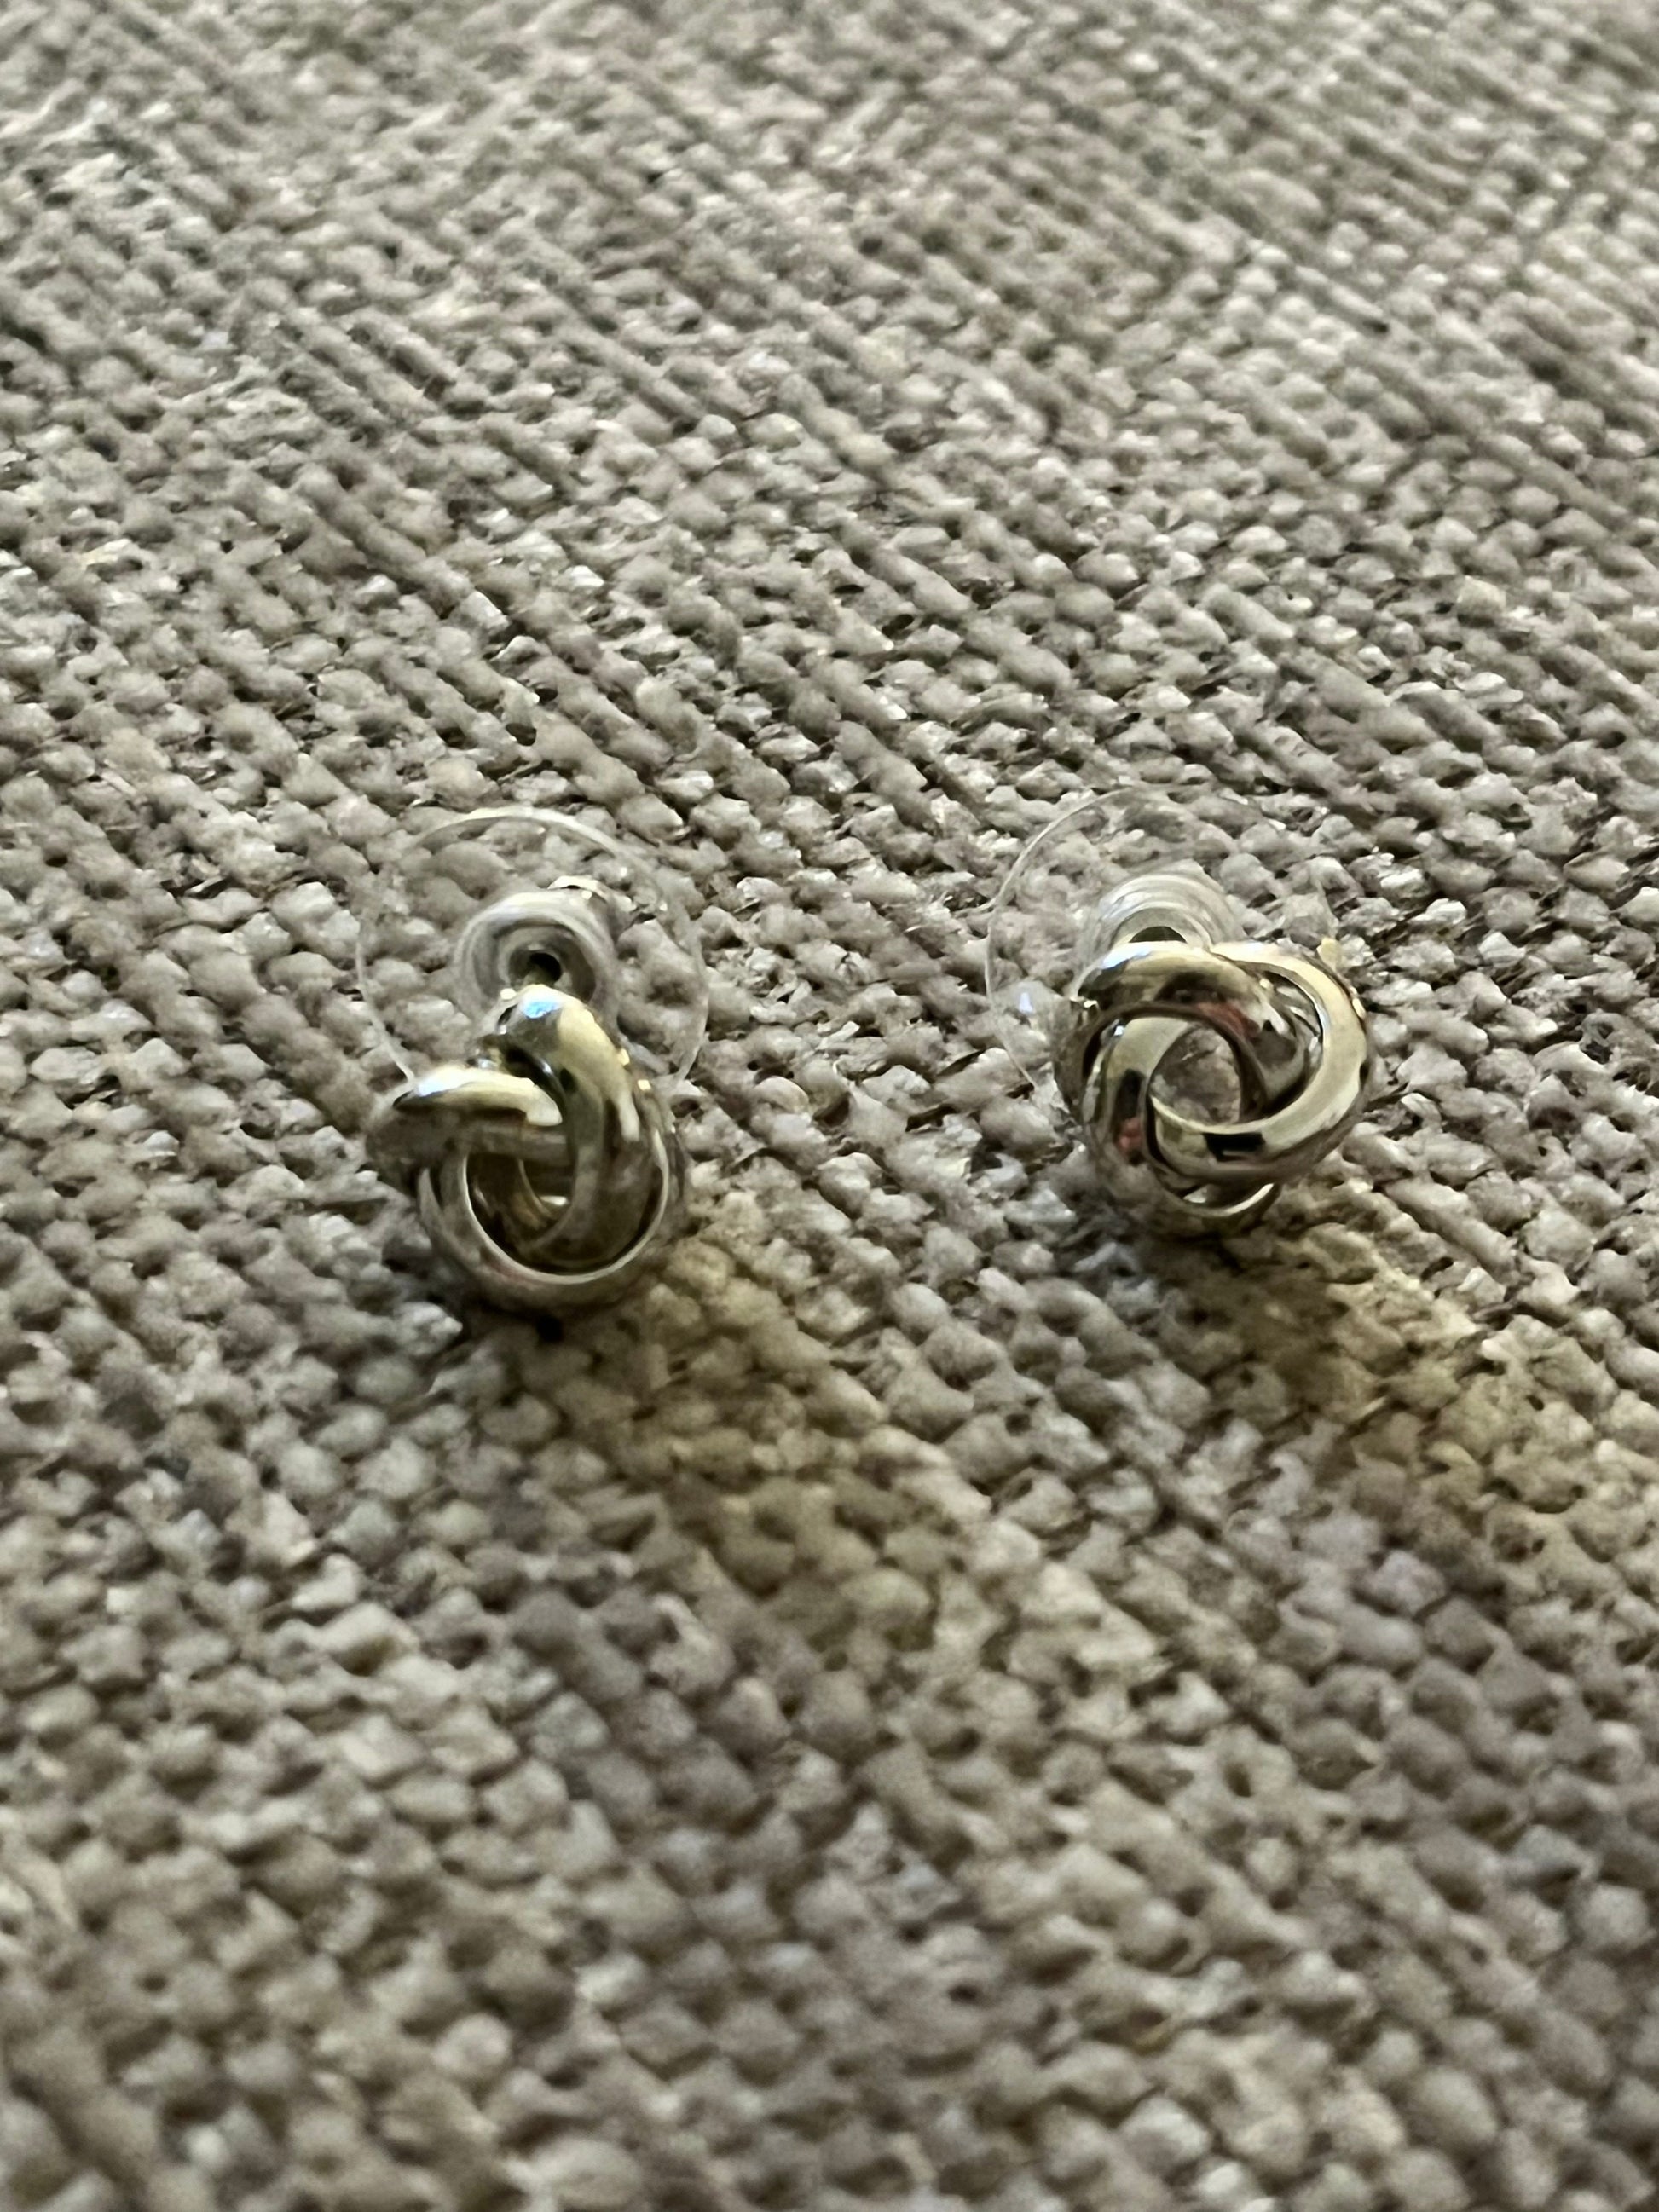 VEEP: Selina's Silver Knot Stud Earrings